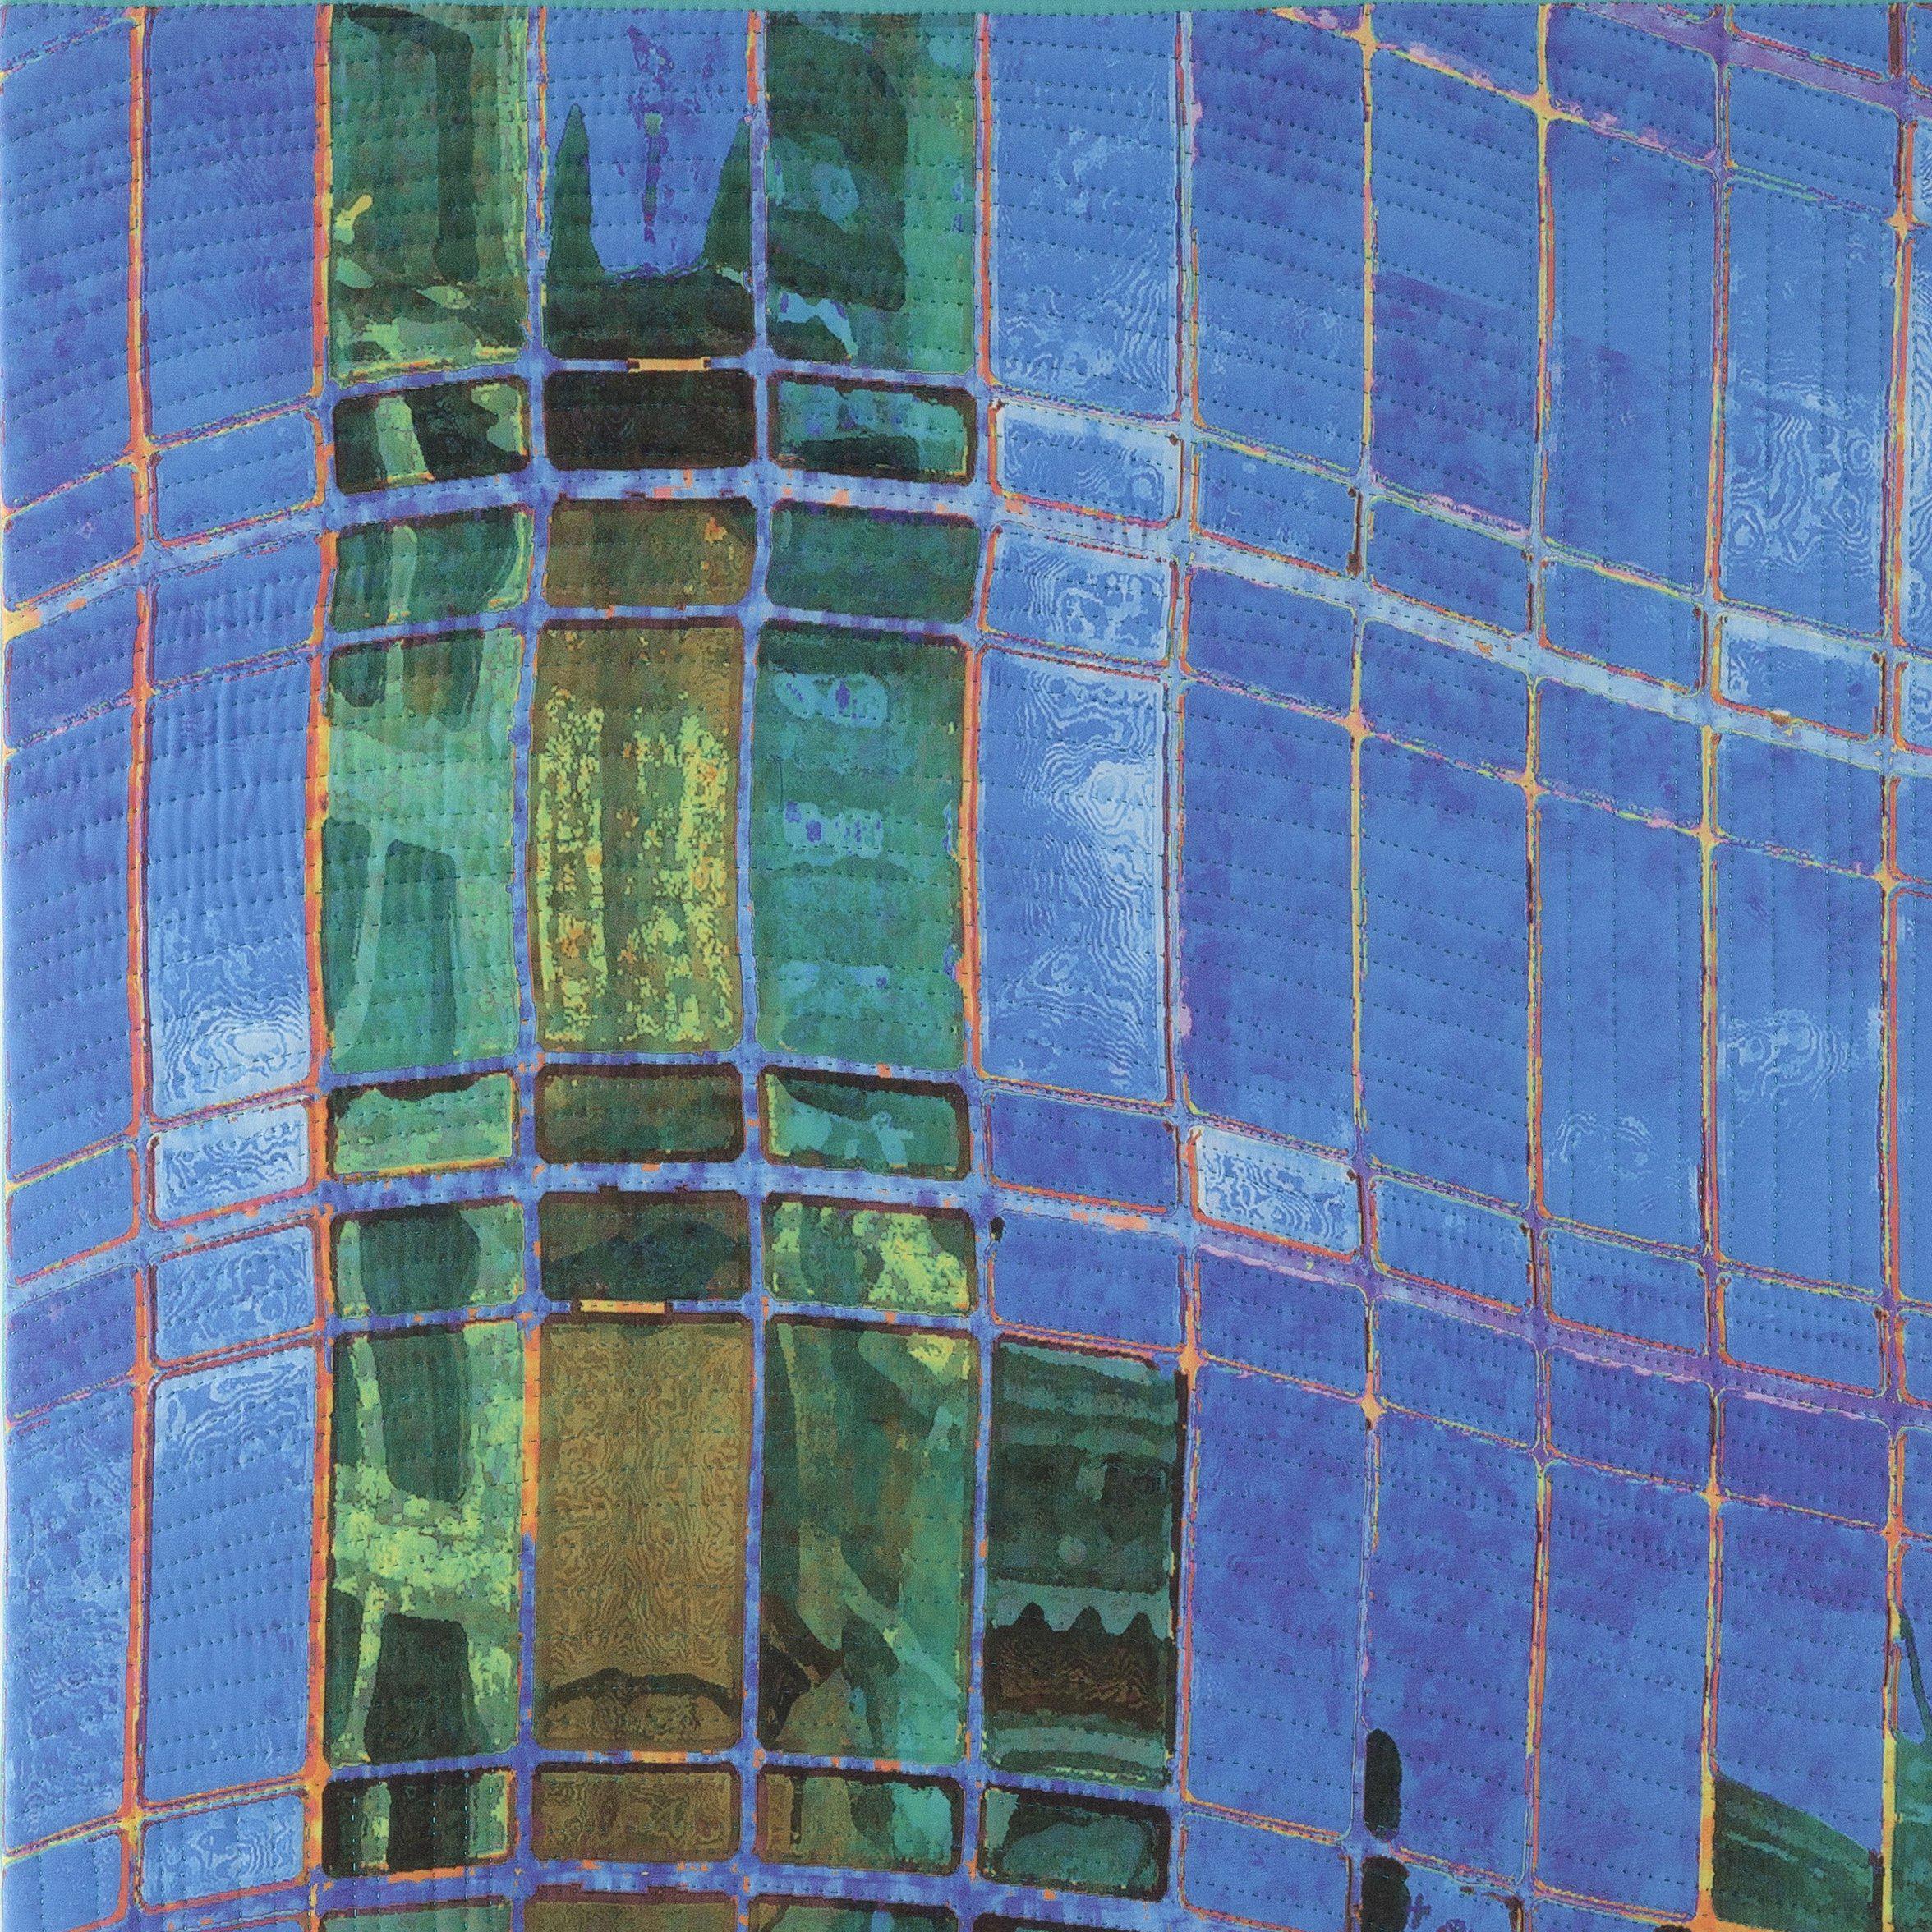 New York Windows 1556, Mixed Media on Canvas - Contemporary Mixed Media Art by Marilyn Henrion